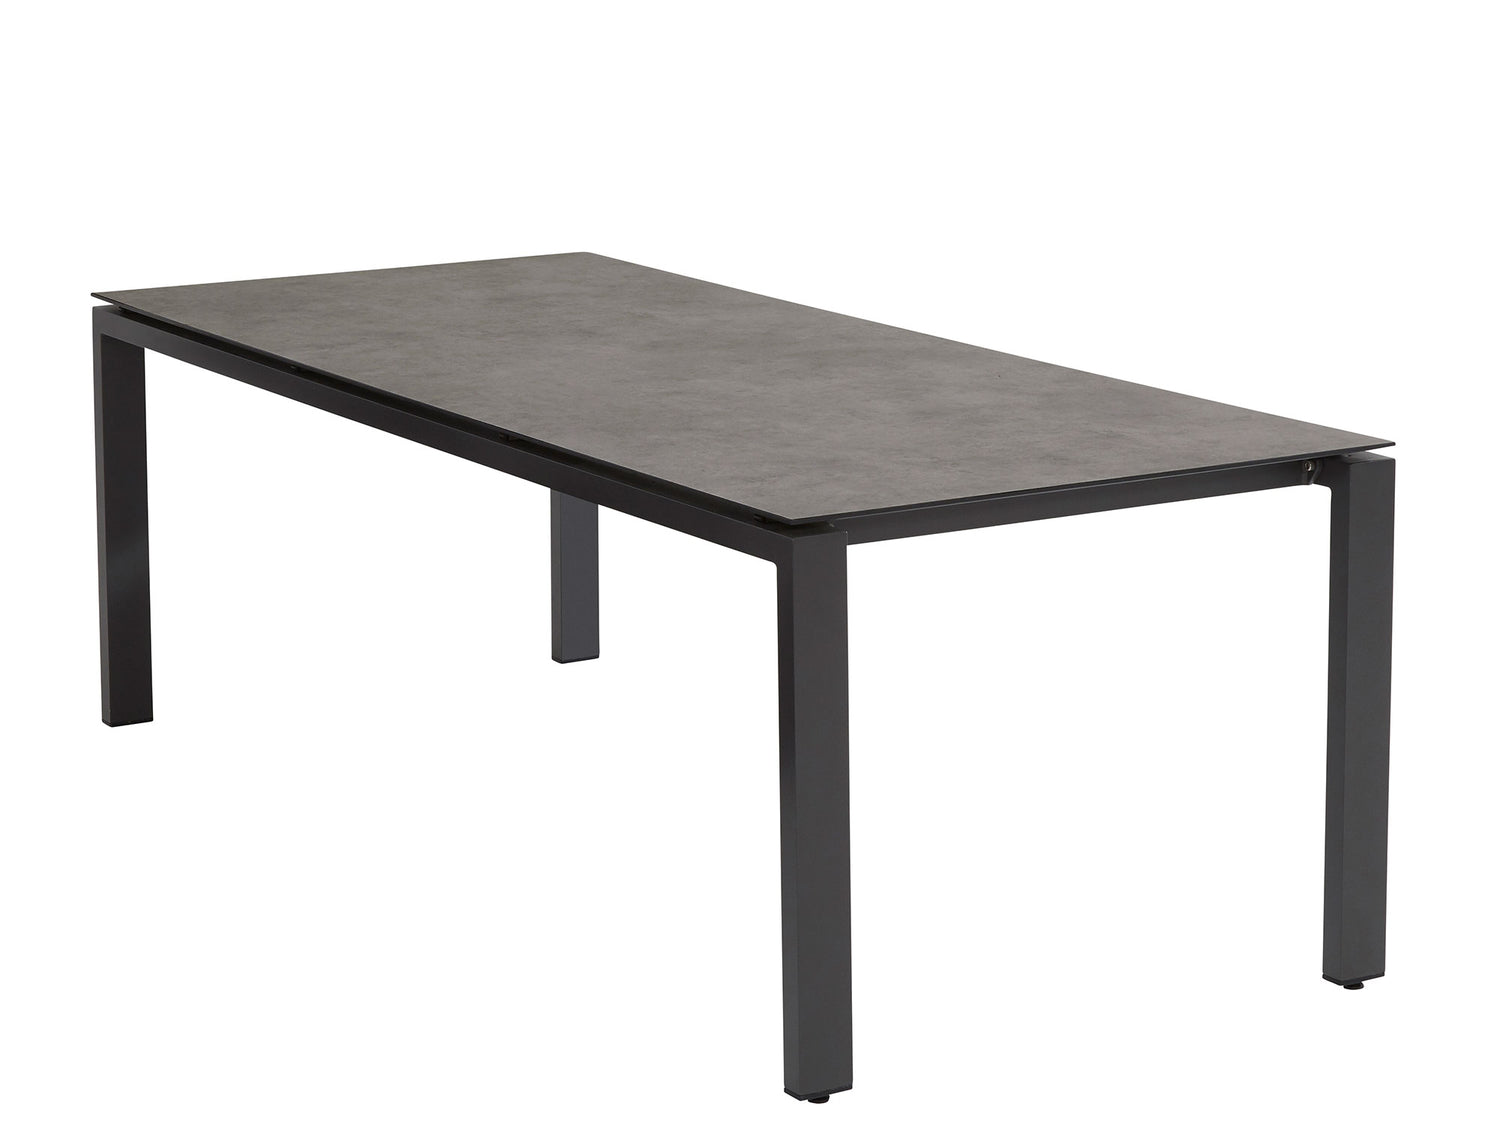 19614-19547_-Goa-table-frame-anthracite-with-HPL-top-dark-grey-220x95cm-01.jpg